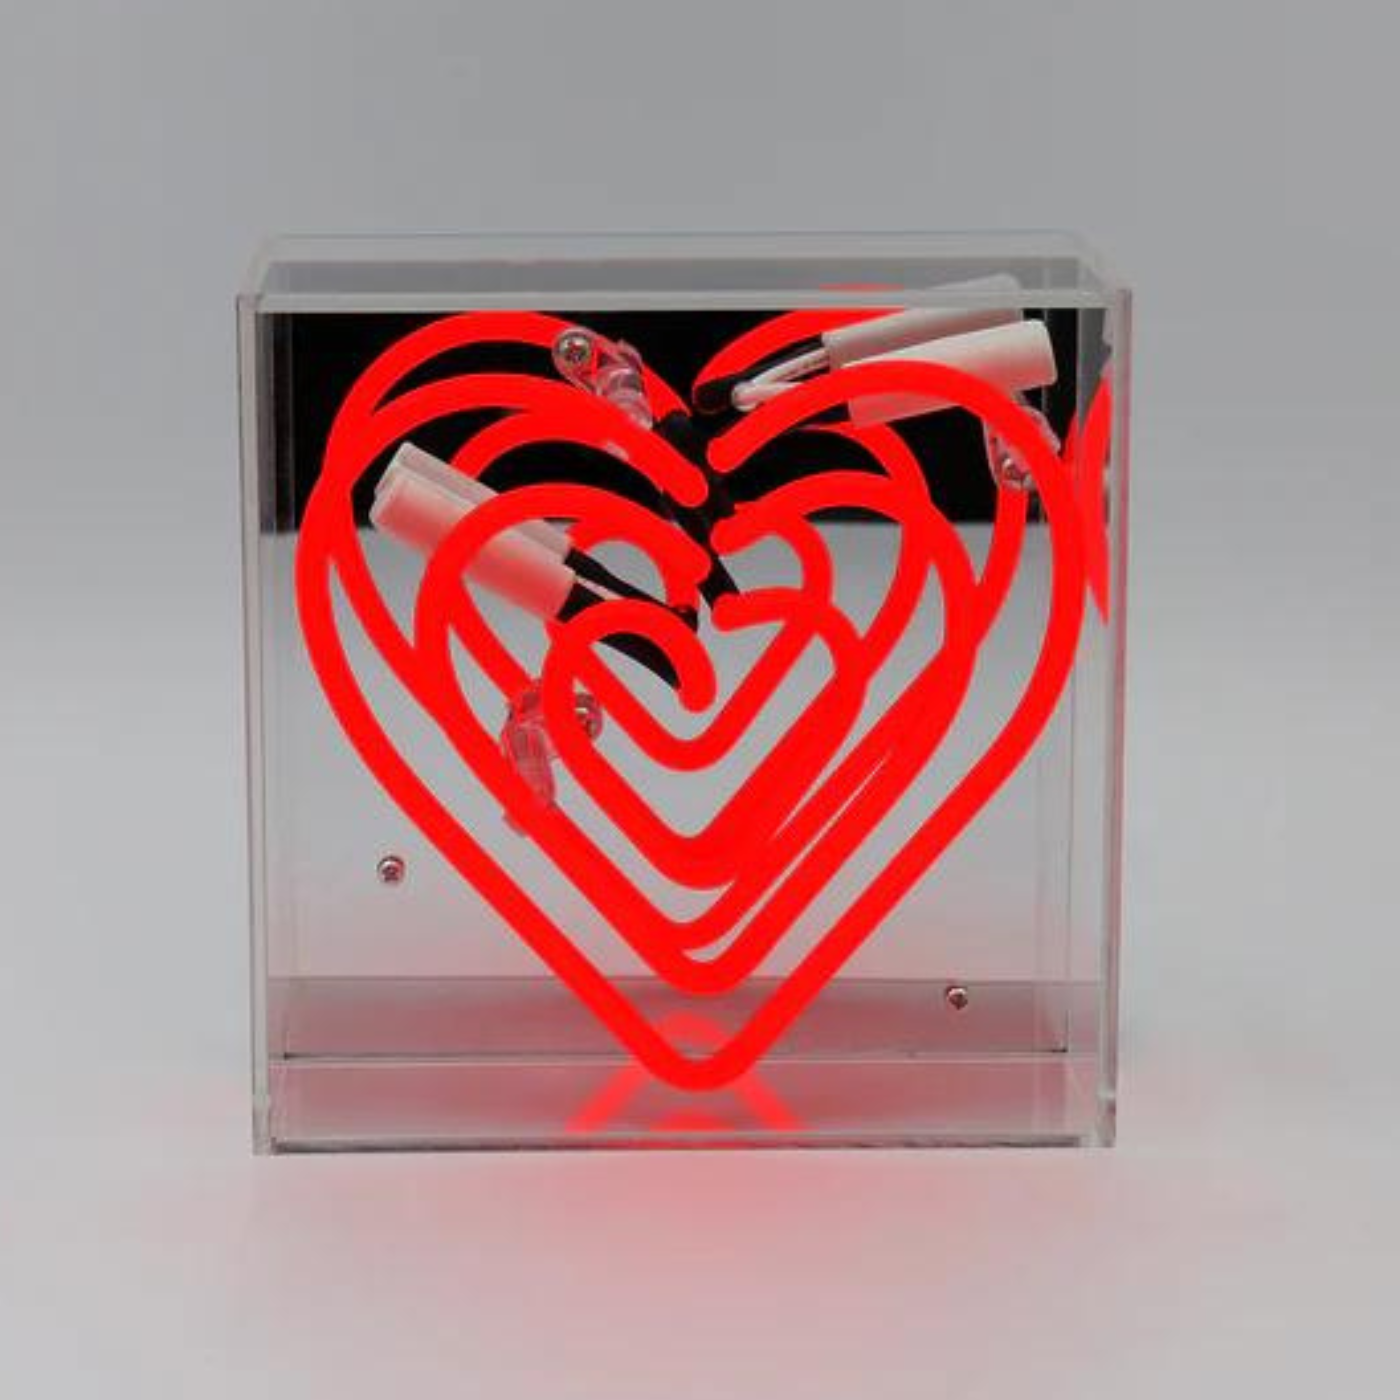 Heart Neon Lightbox